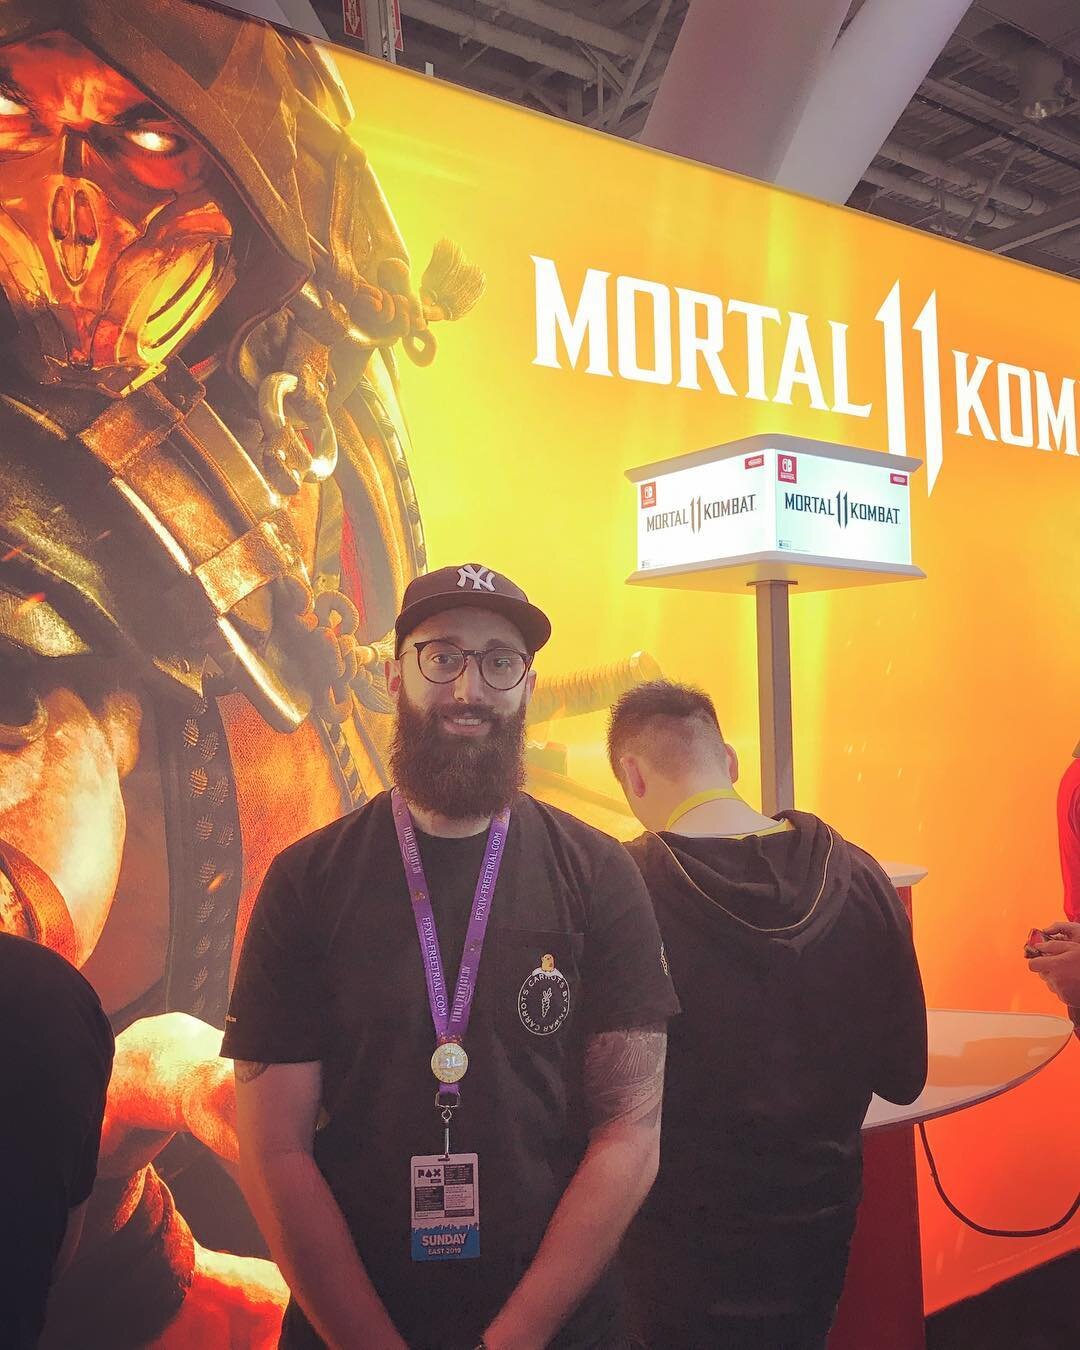 Player Stories In Mortal Kombat 11 — Brian Keschinger